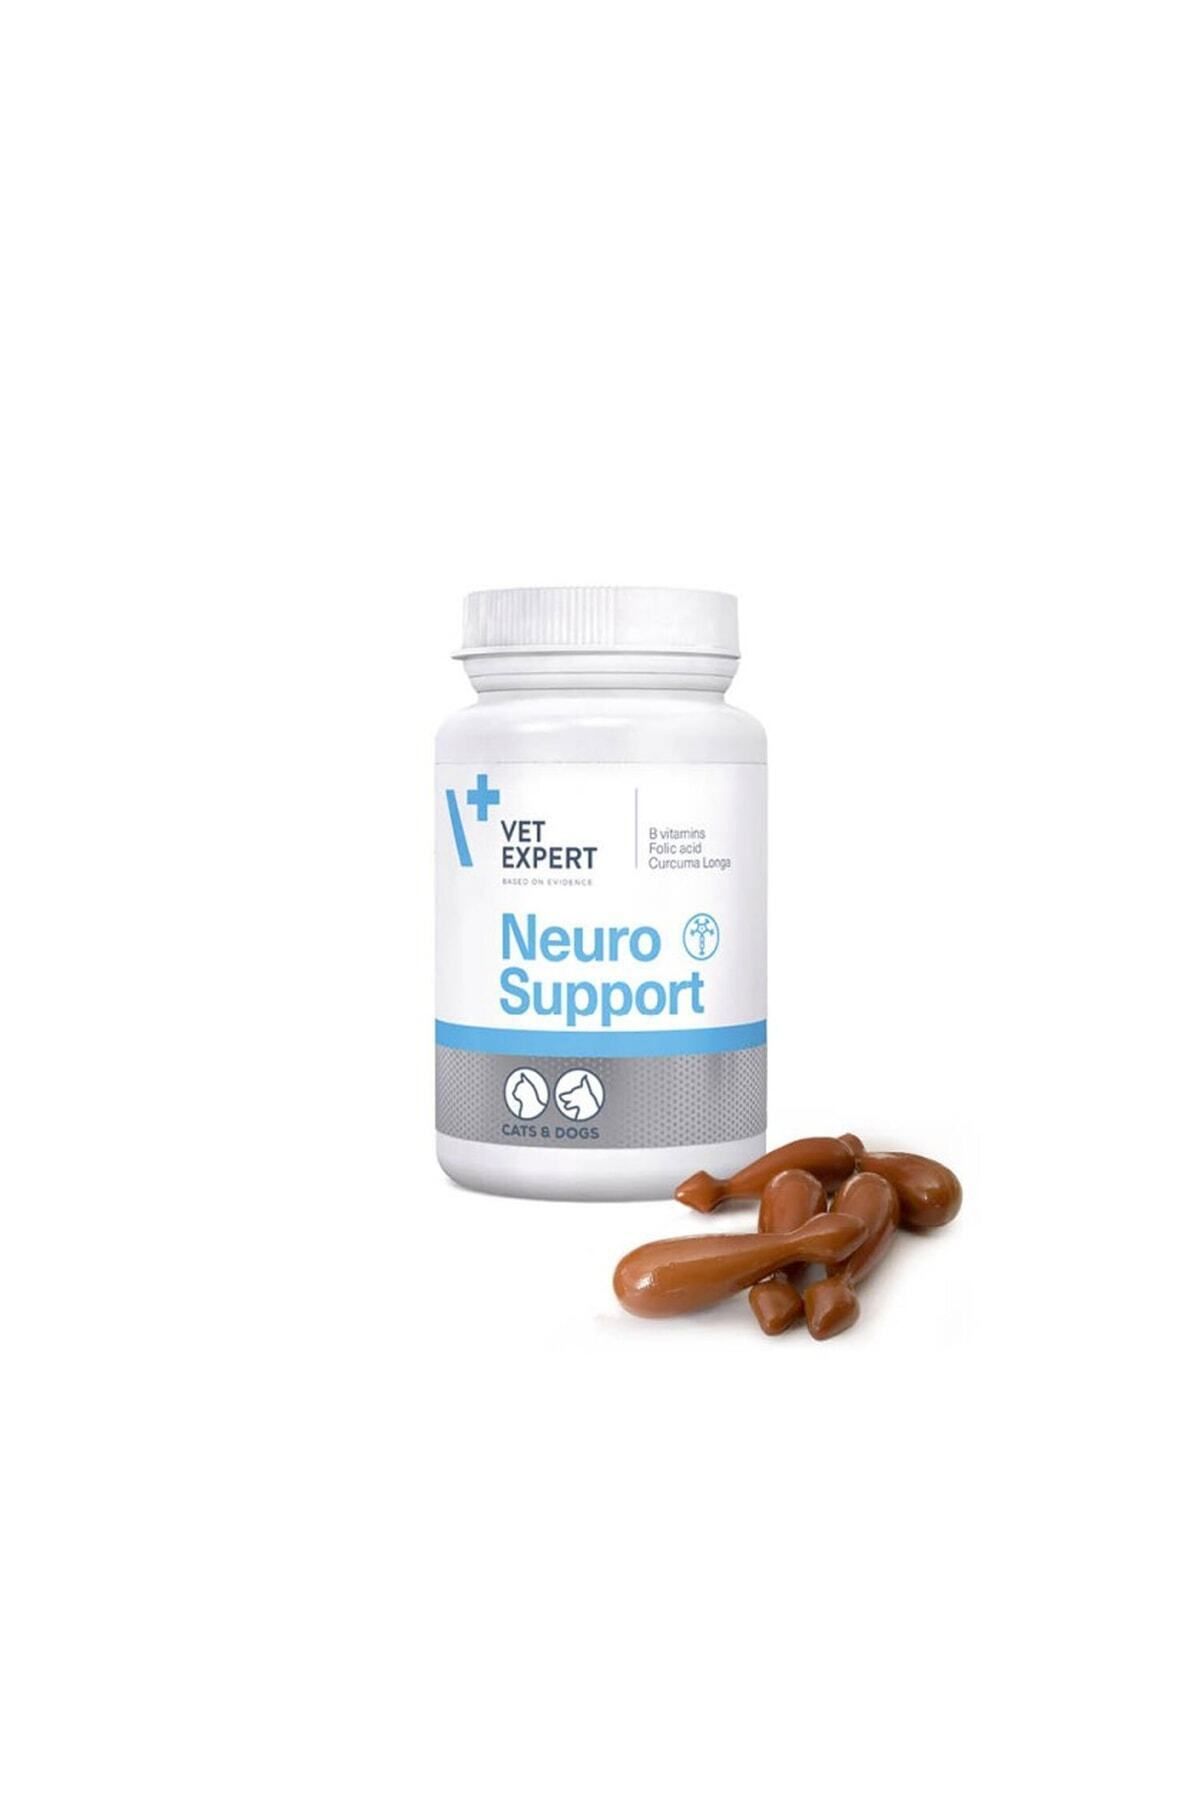 vet expert Neuro Support